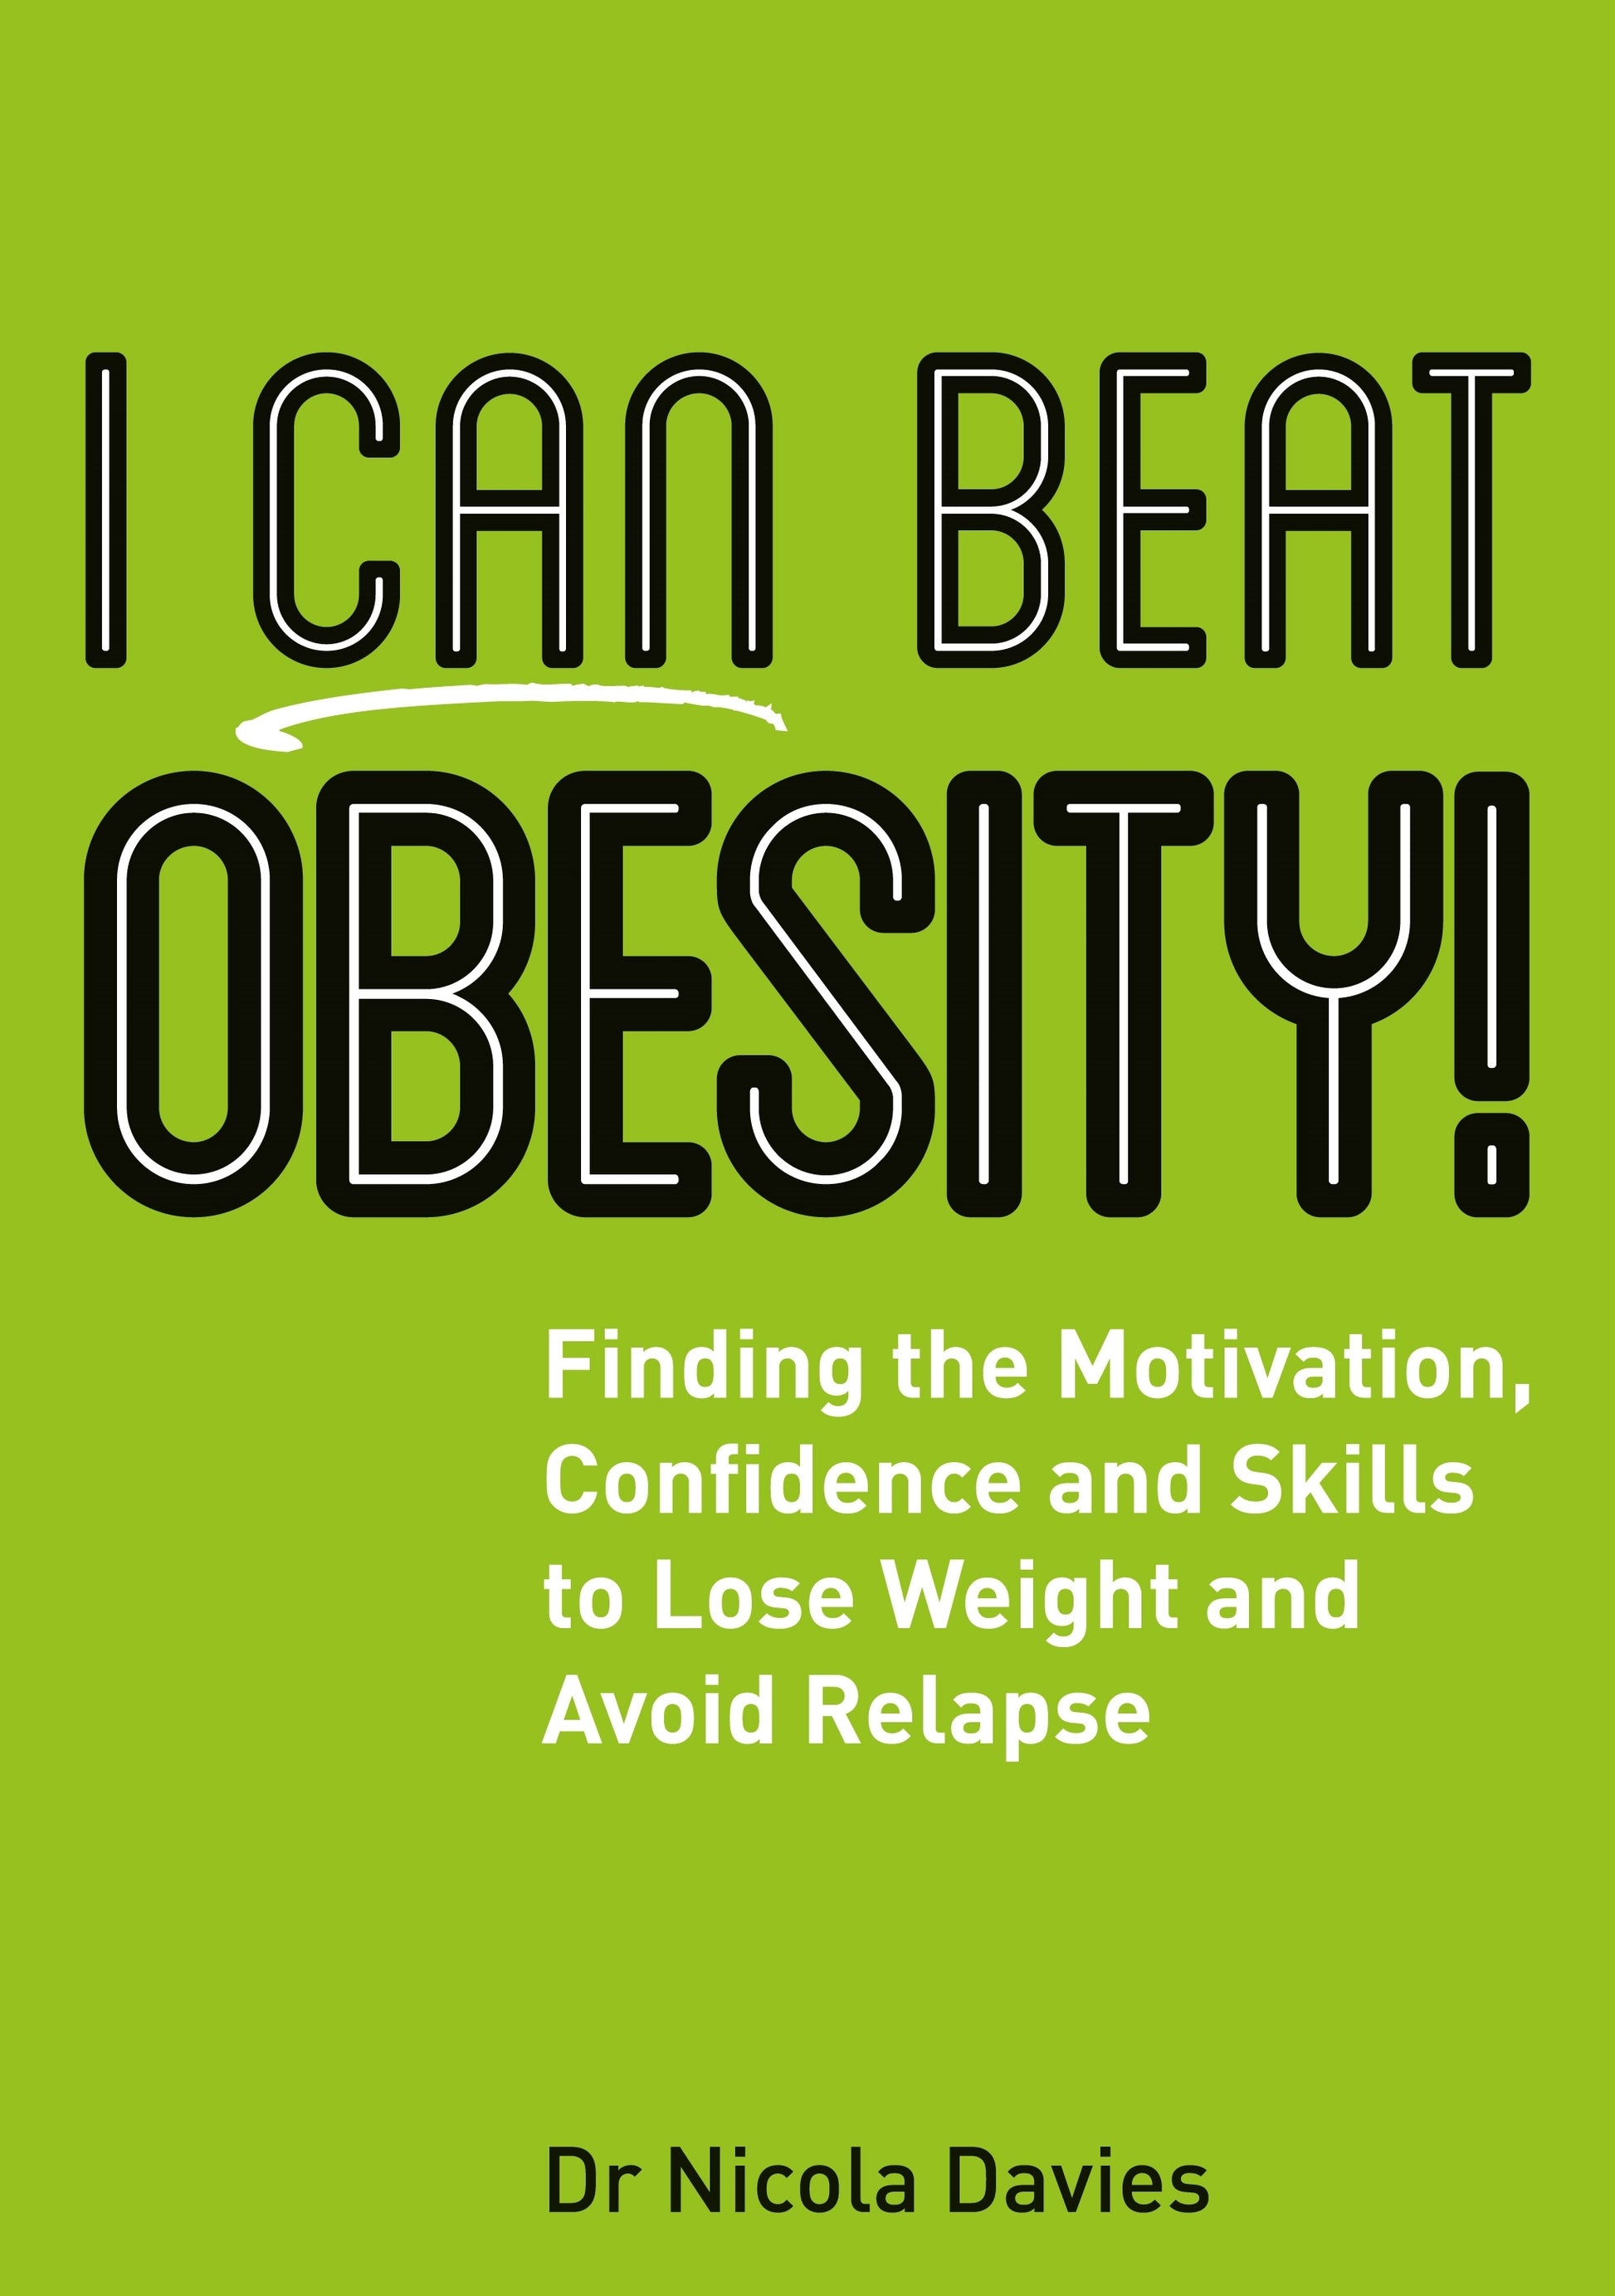 I Can Beat Obesity! by Jane DeVille-Almond, Nicola Davies